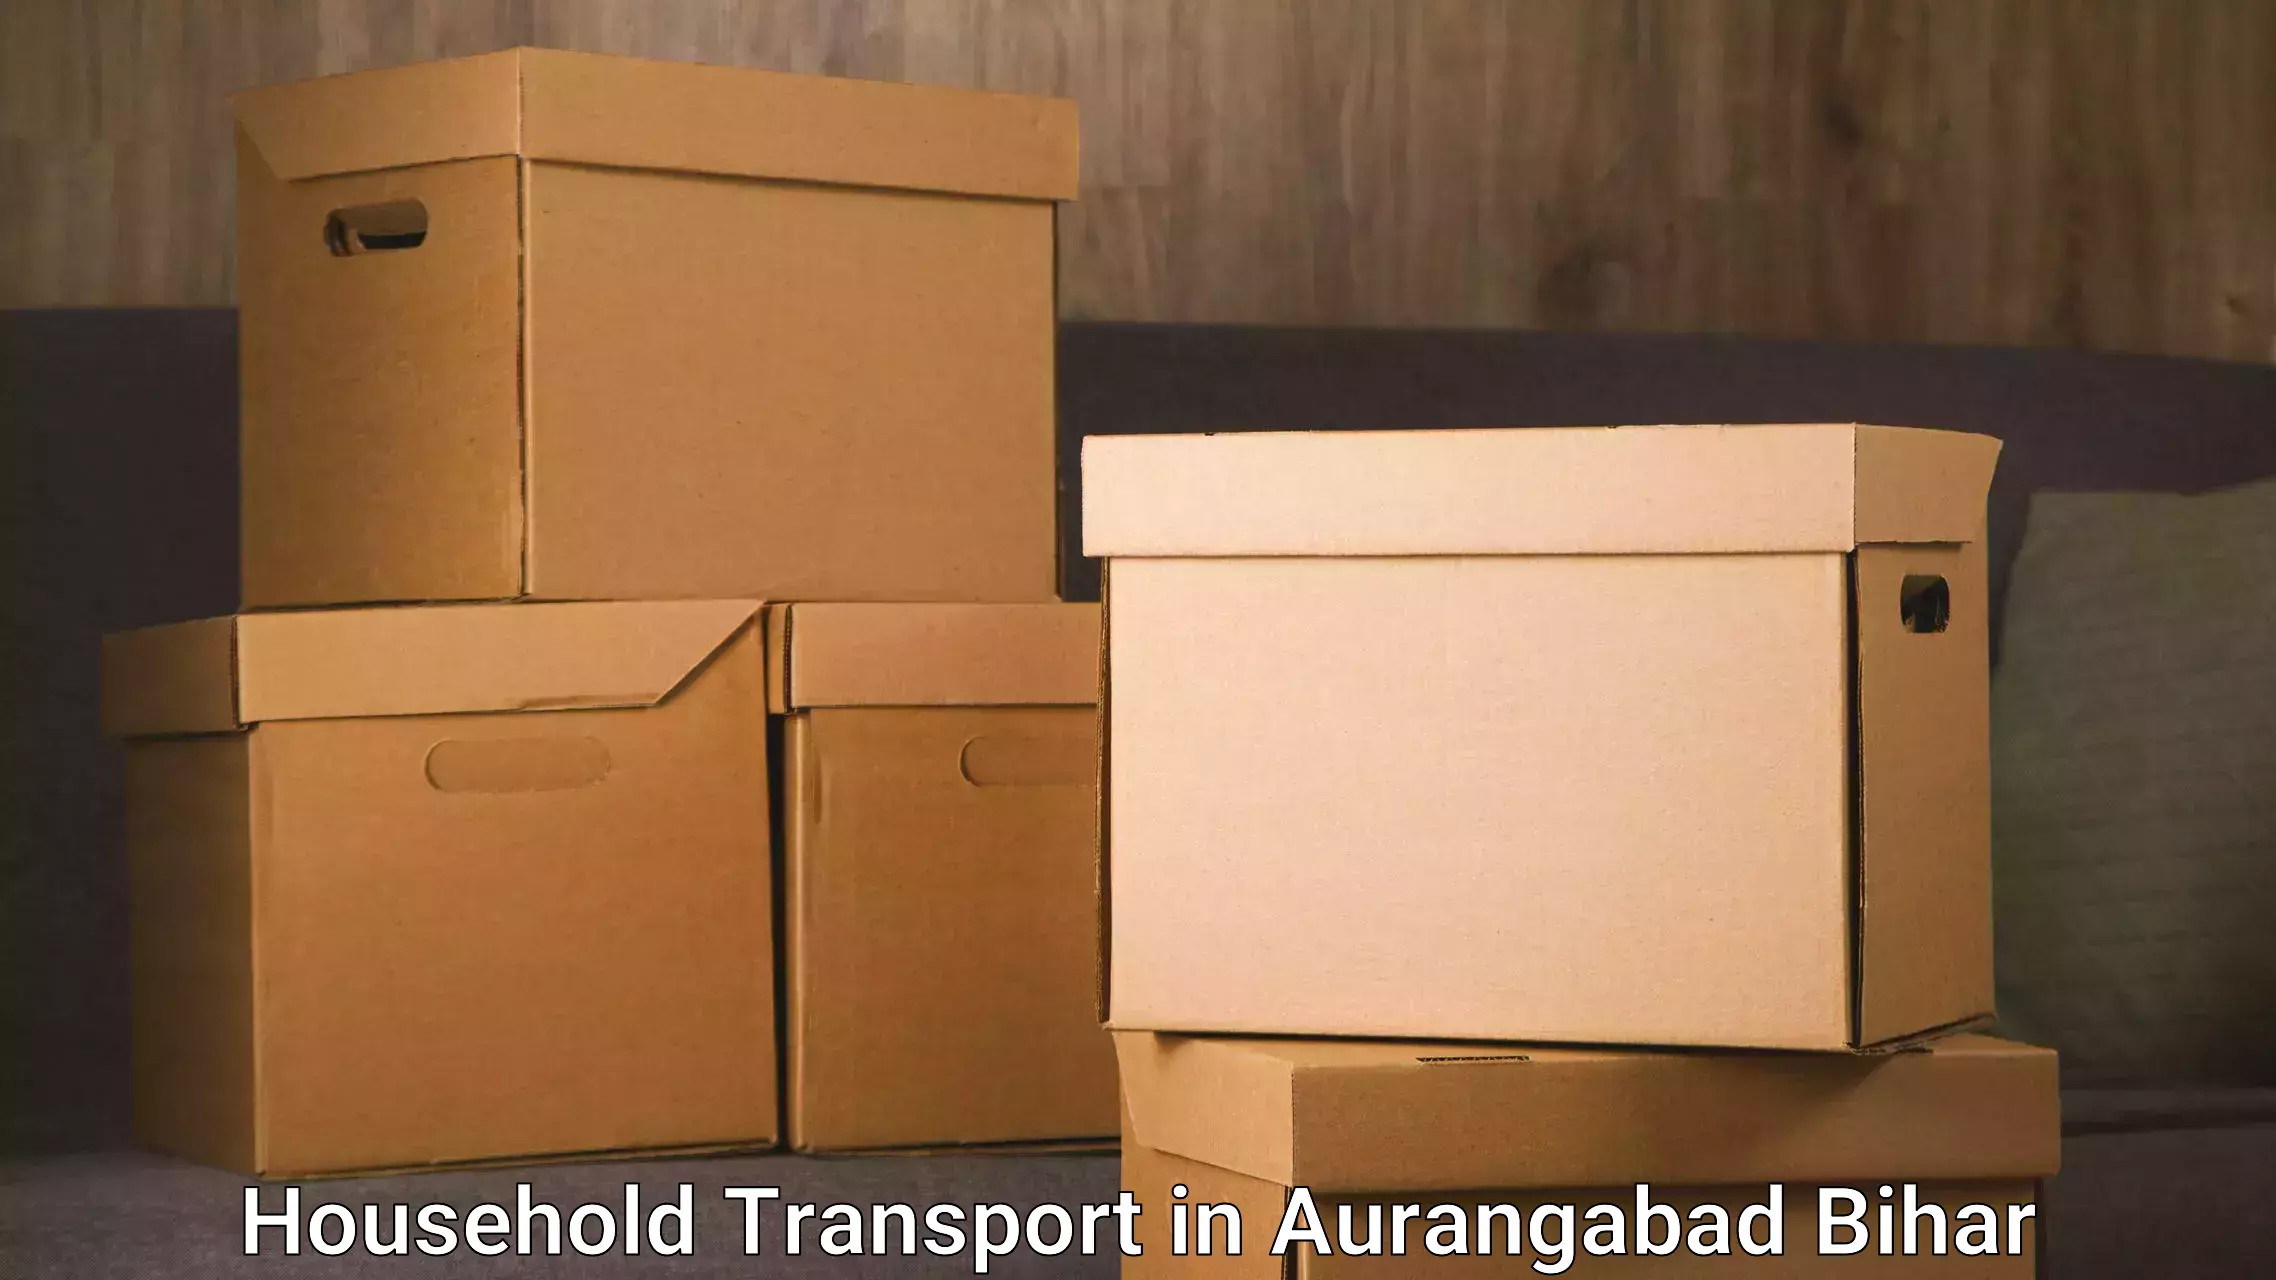 Professional goods transport in Aurangabad Bihar